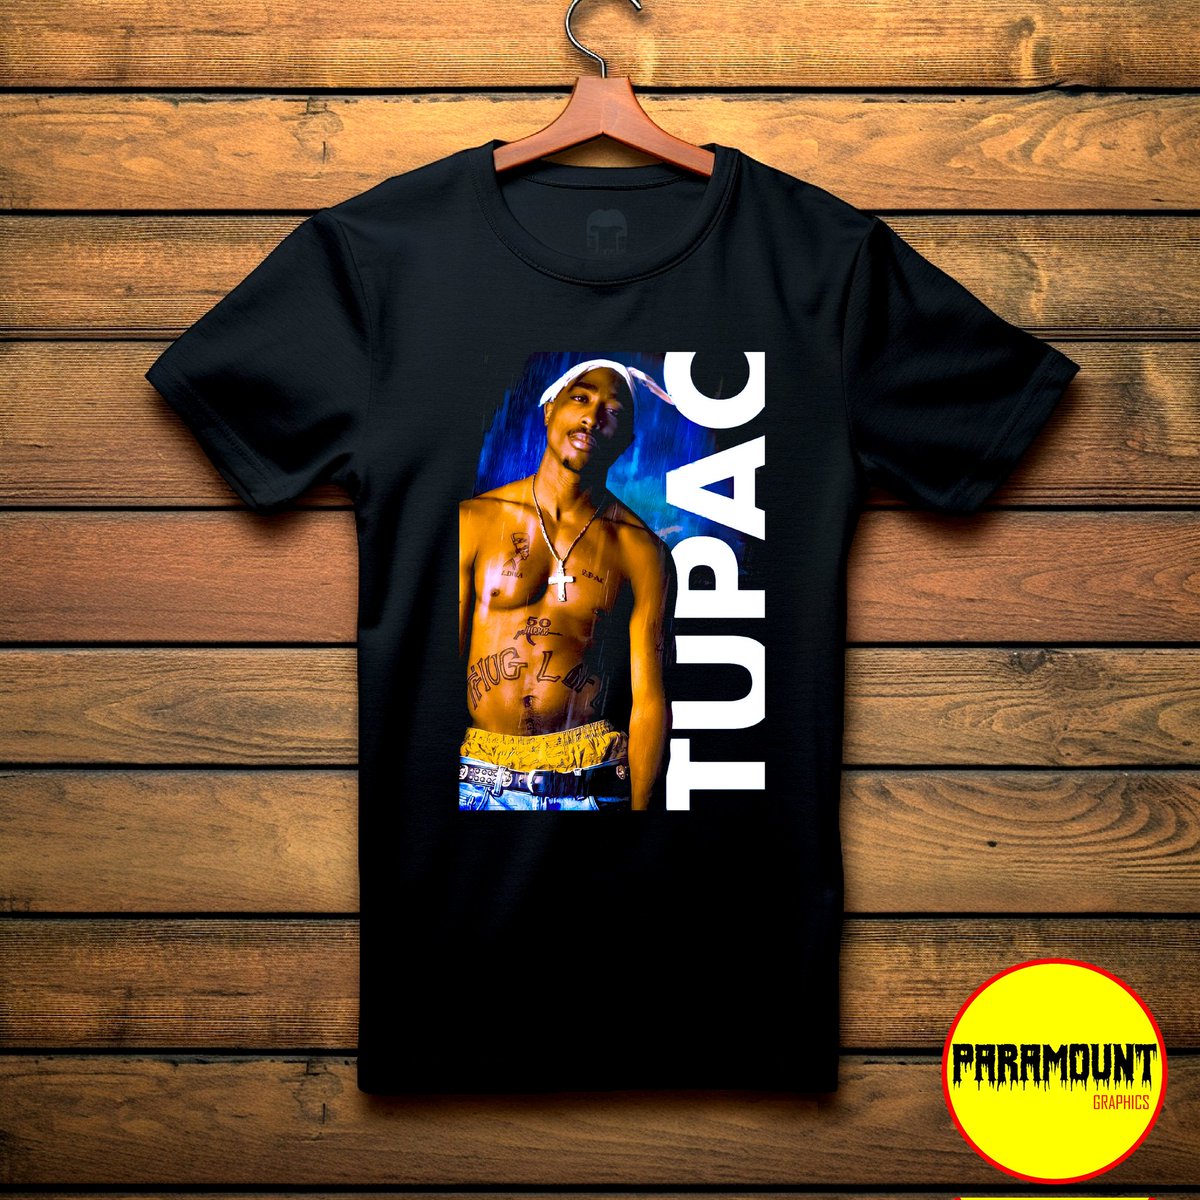 TPB04-20-06

#screenprinting #screenprint #customembroidery #customprint #shirtdesigns #dtg #dtgprinting #dtgprint #theparamountgfx #dtf #dtfprinting #dtftansfers #dtfprint #hiphop #rap #music #hiphopculture #hiphopmusic #rapper #hiphopartist #rapmusic #hiphophead #hiphoplife